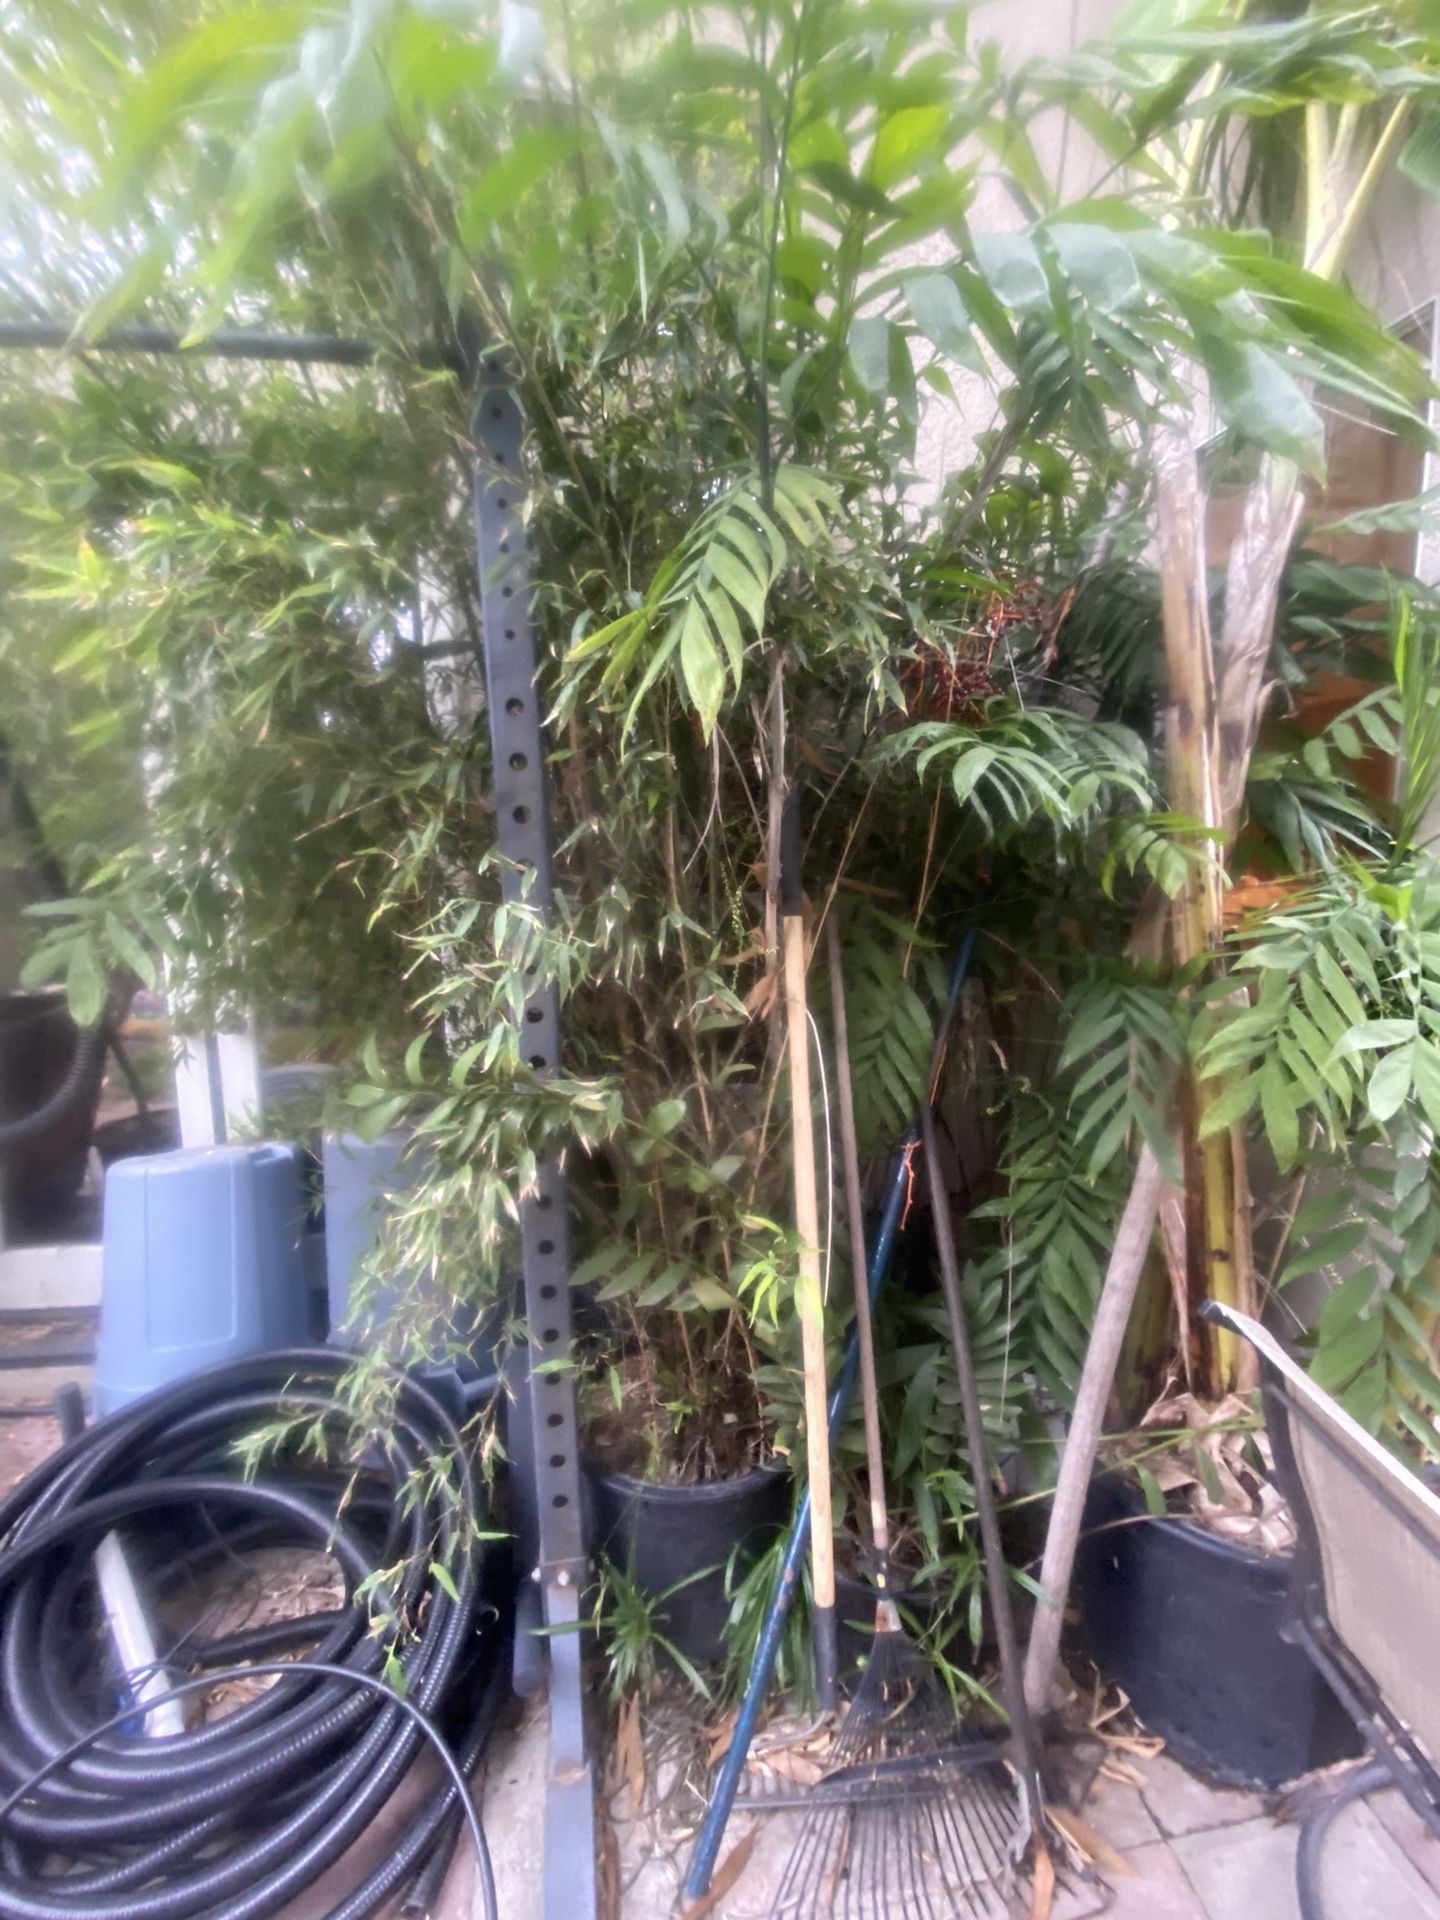 Plants For Sale: Bottle Palm, Plumeria, Bamboo, Chamaedorea 